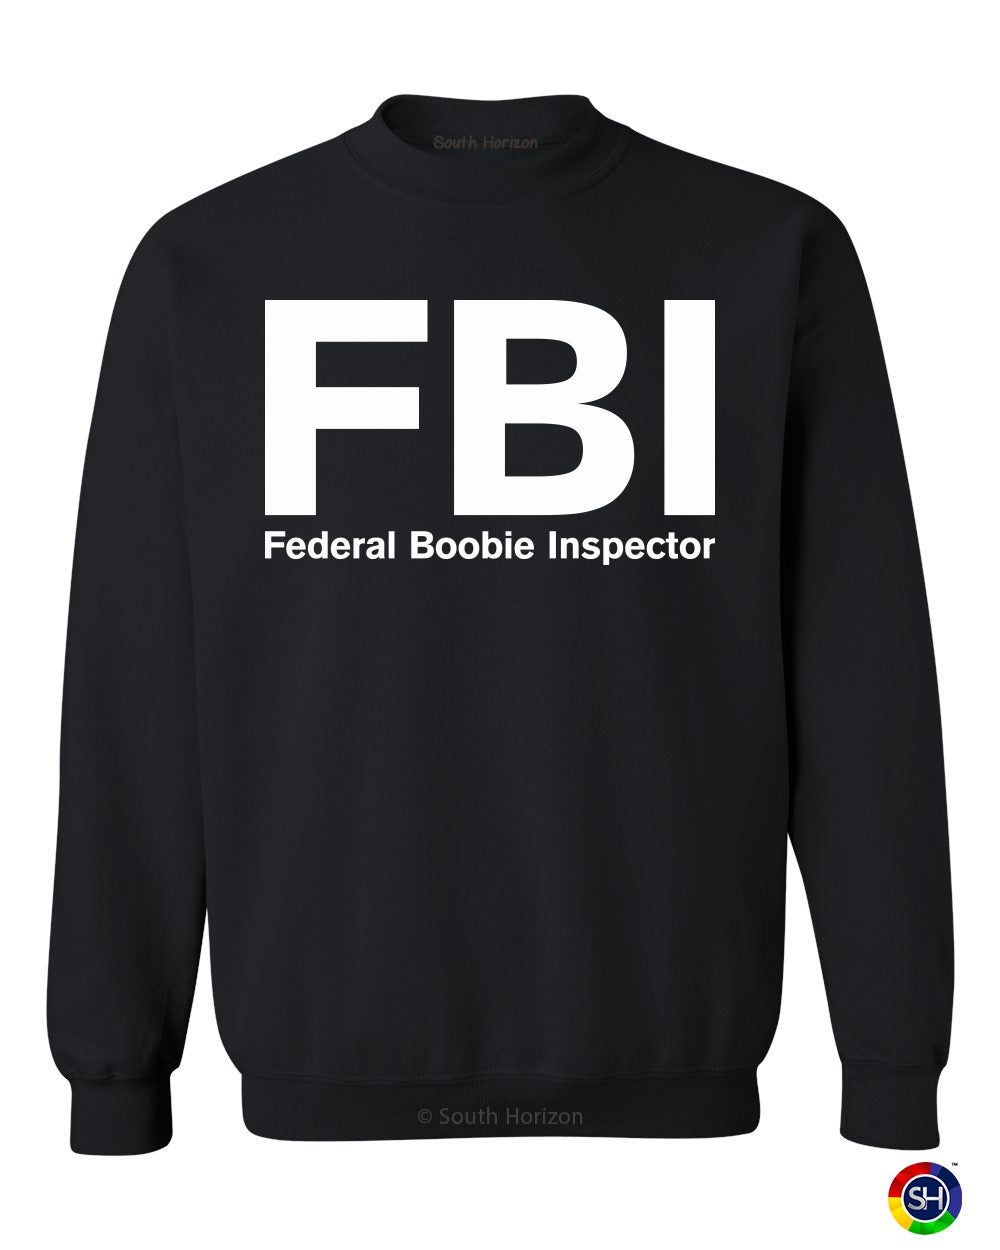 Federal Boobie Inspector on SweatShirt